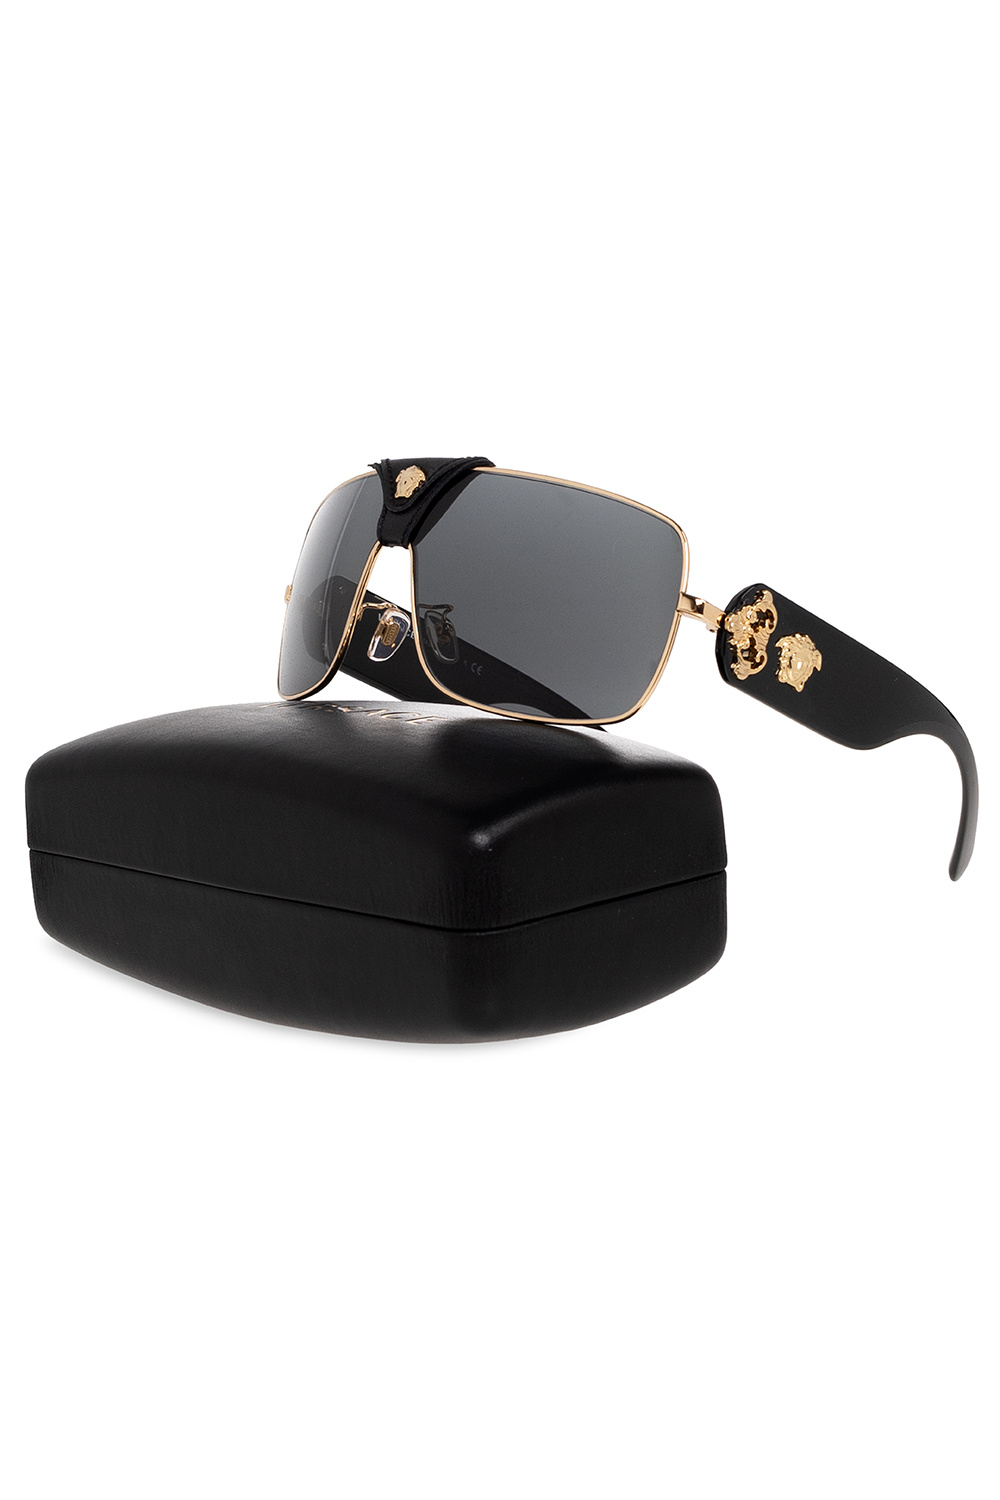 Versace category sunglasses style aviator